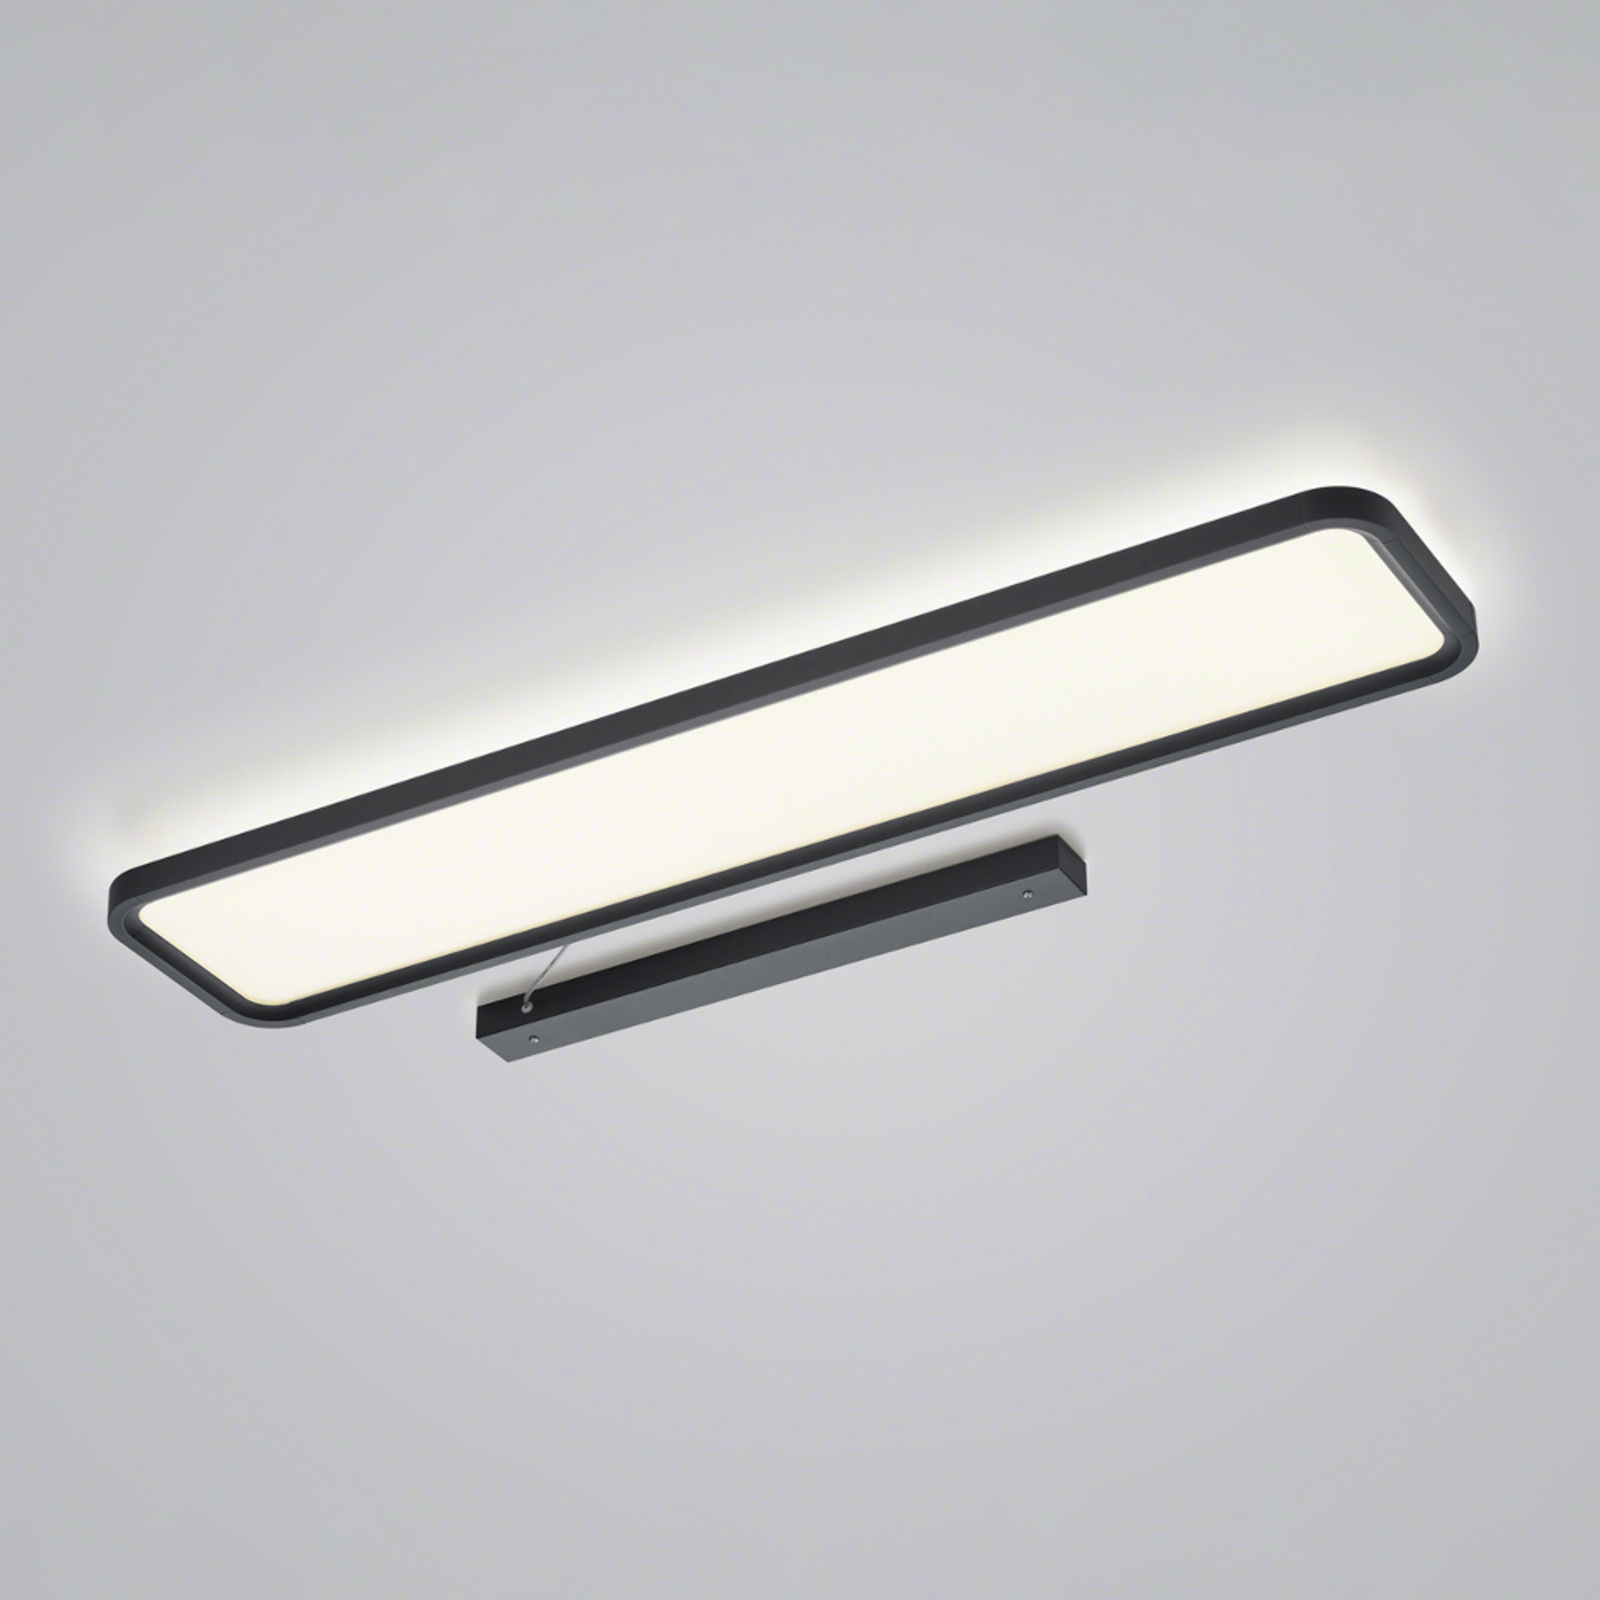 Helestra Vesp LED panel backlight 120x26cm black